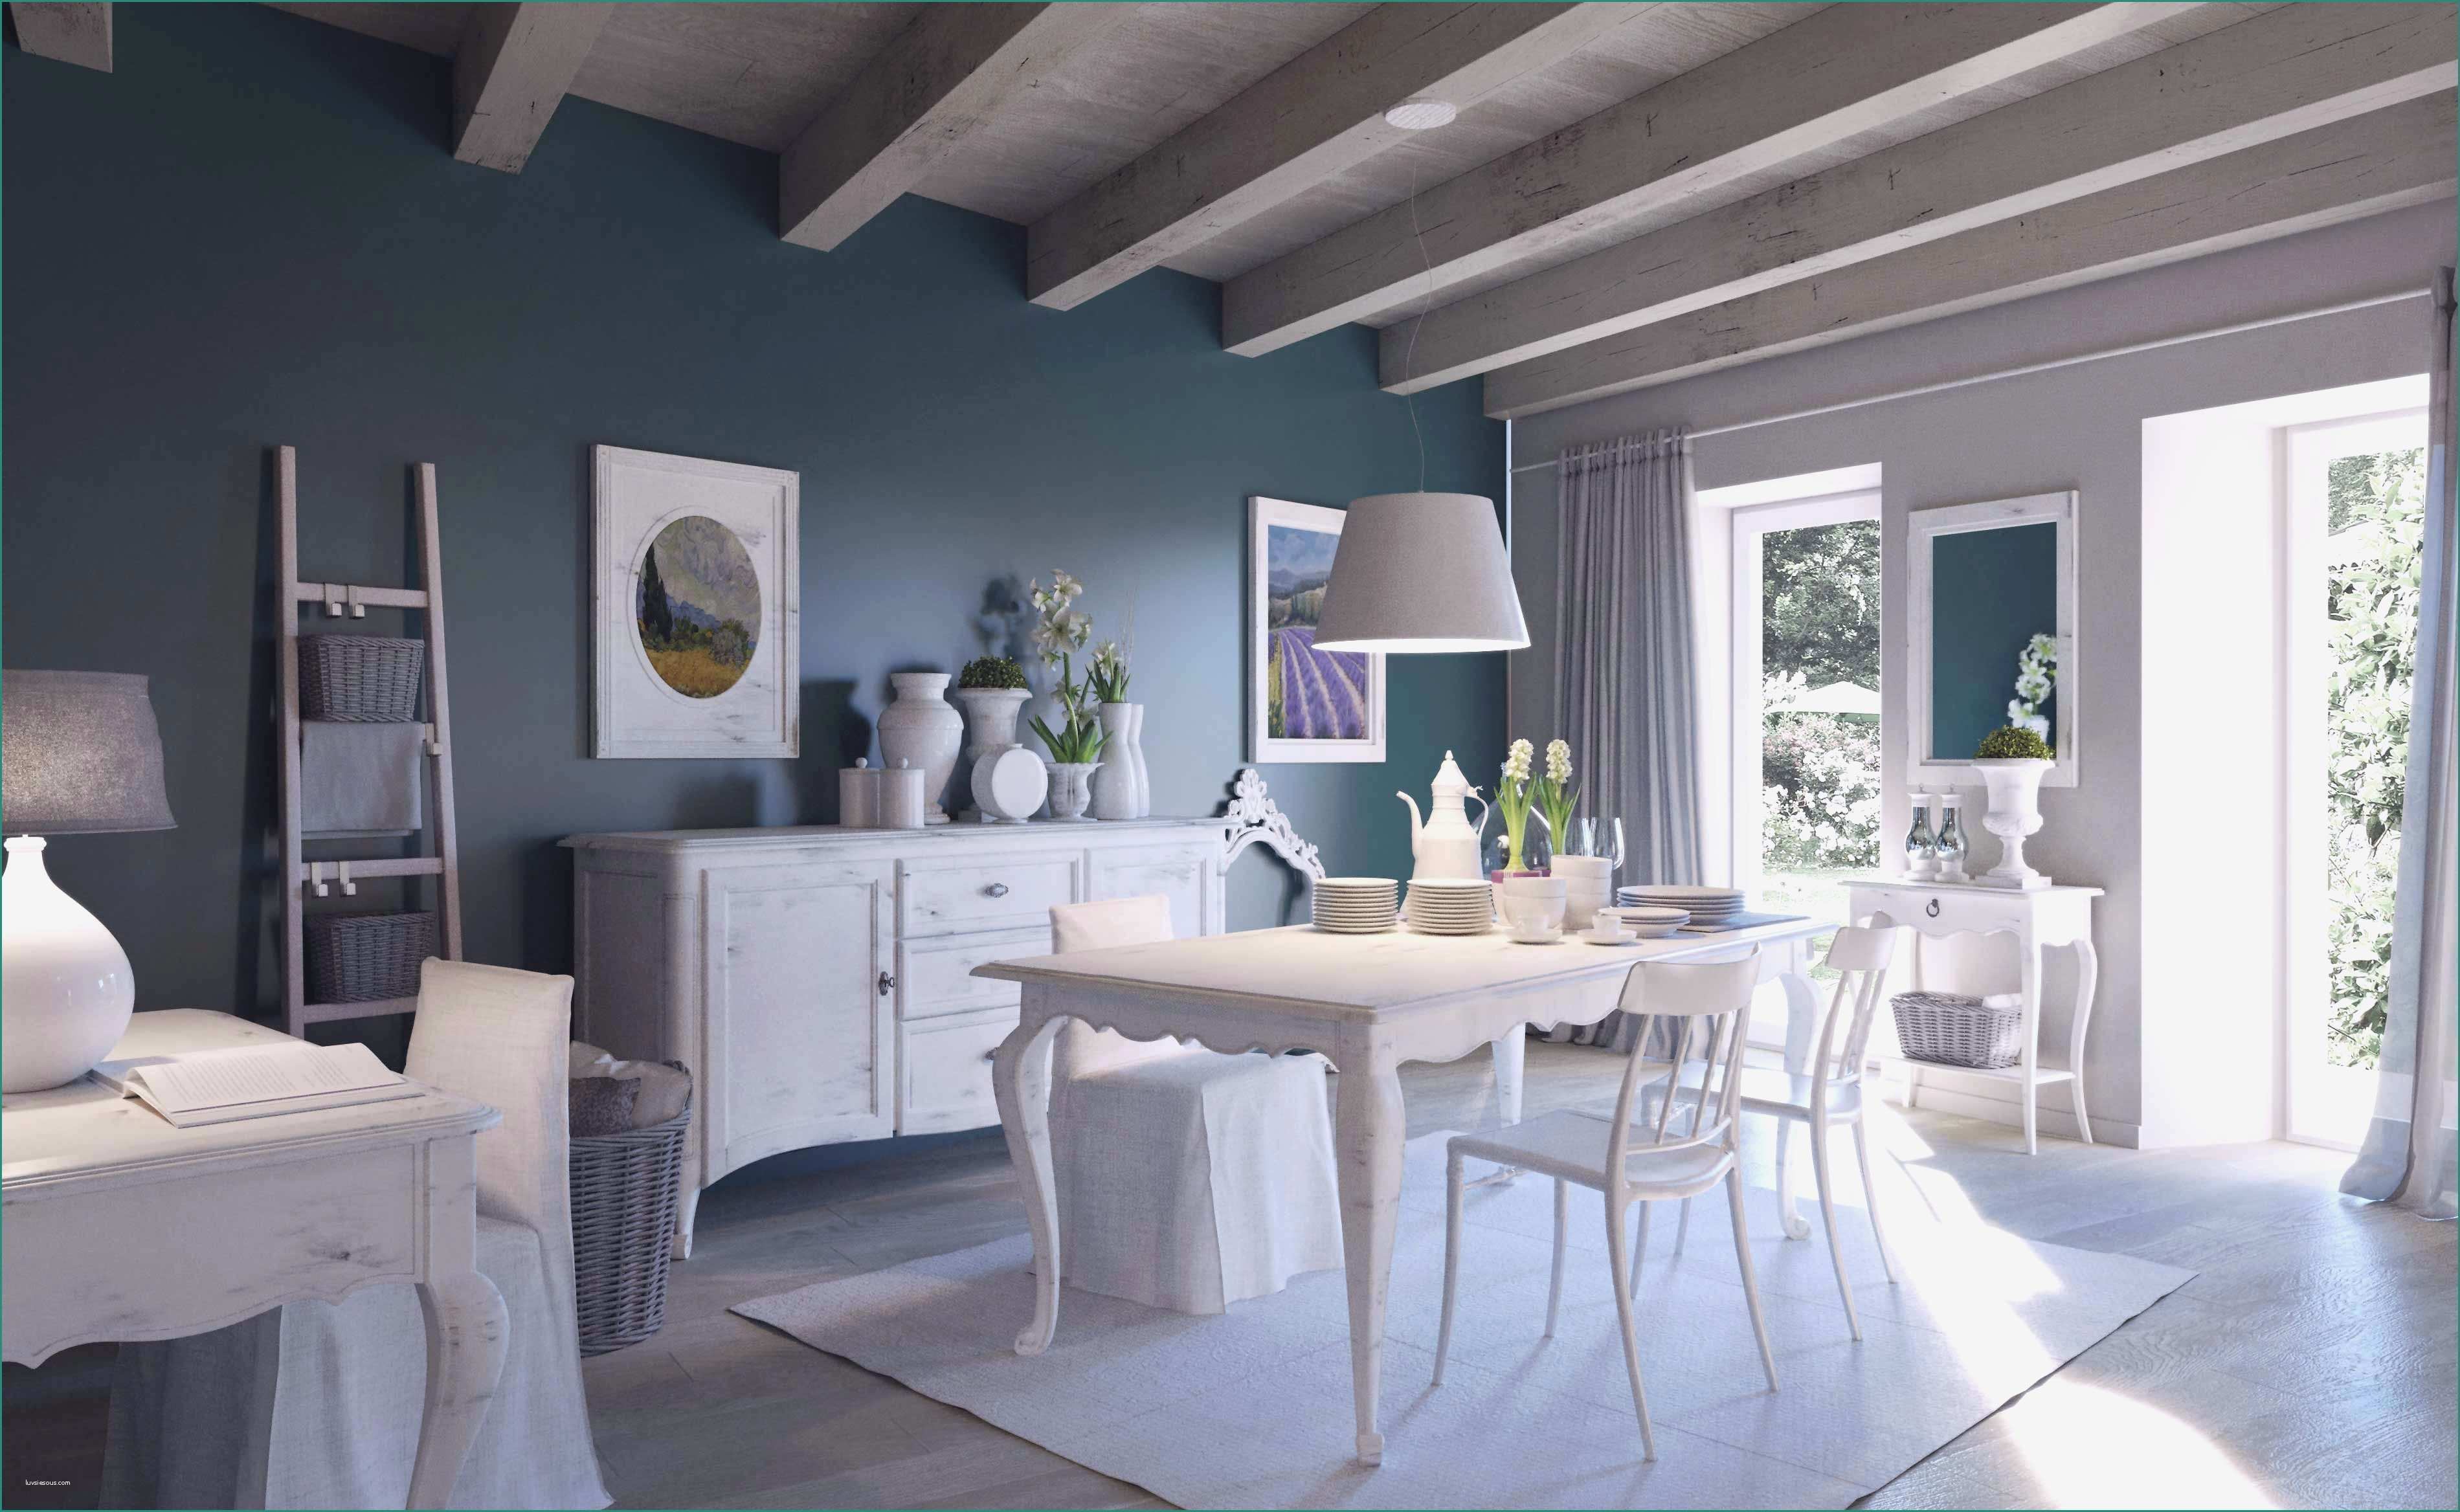 Colori Cucine Moderne E ispirazione Arredamenti Moderni Casa Design Idee Su Arredamento